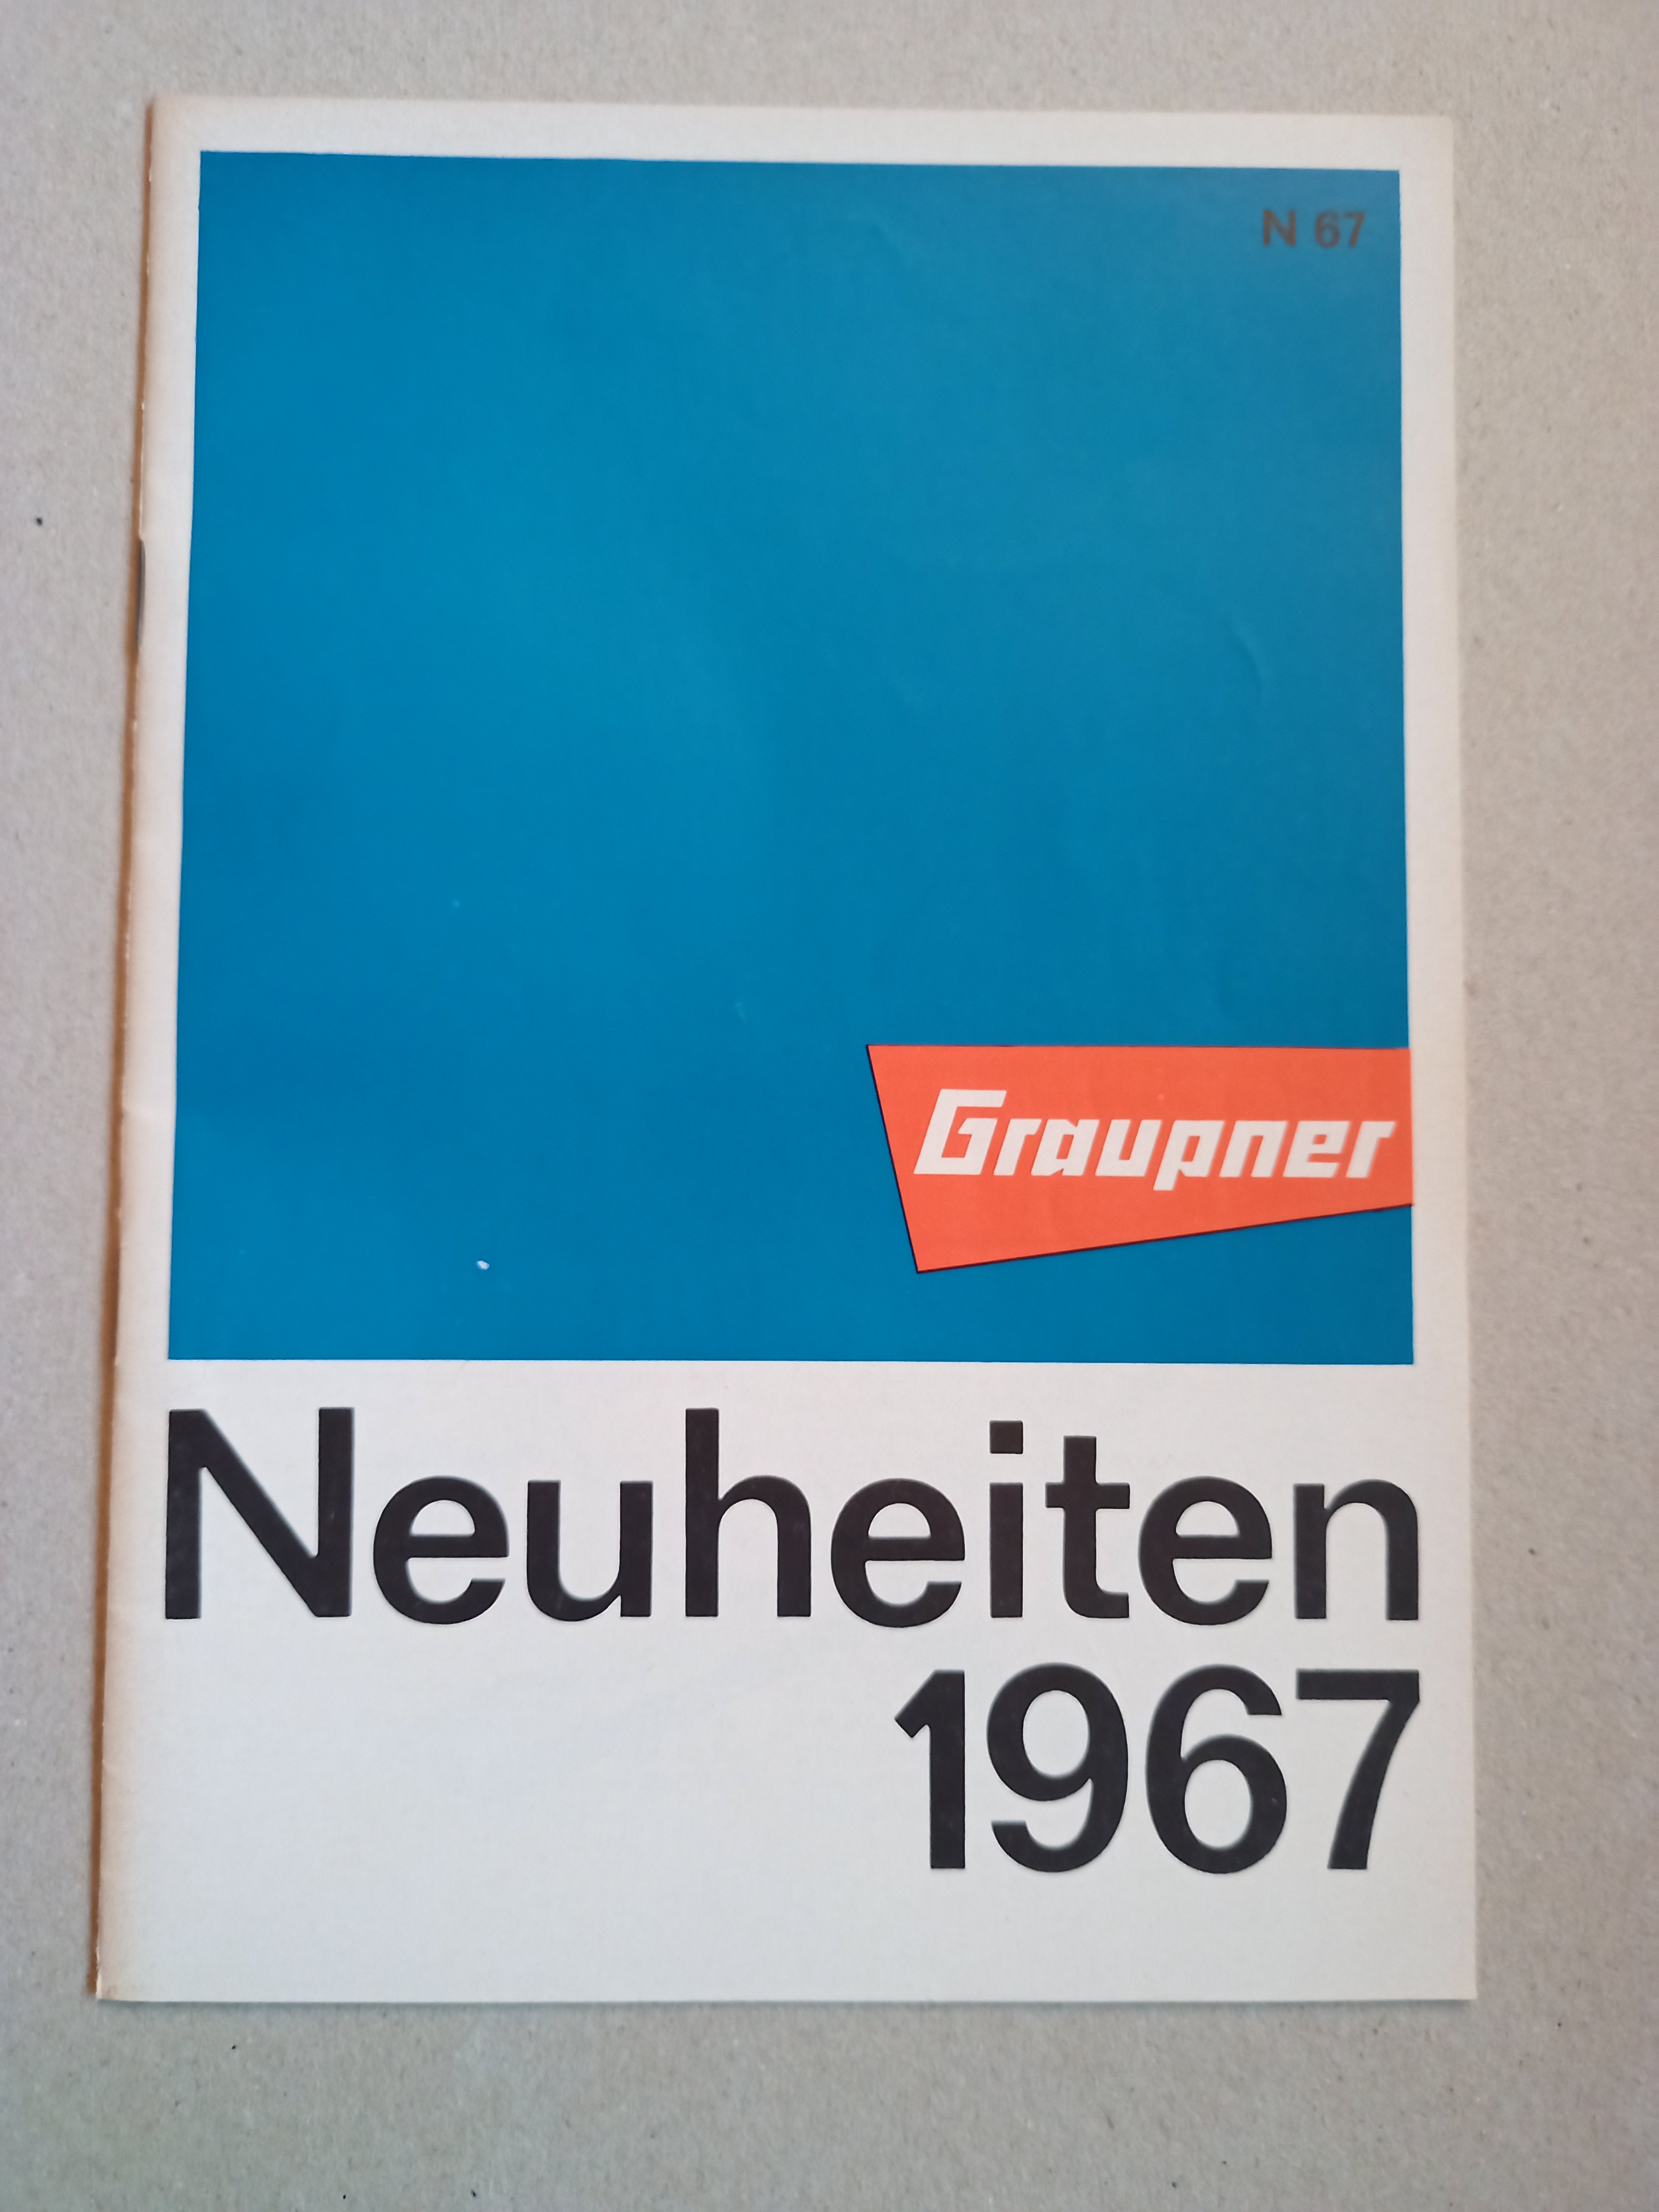 Graupner Neuheiten 1967 (Deutsches Segelflugmuseum mit Modellflug CC BY-NC-SA)